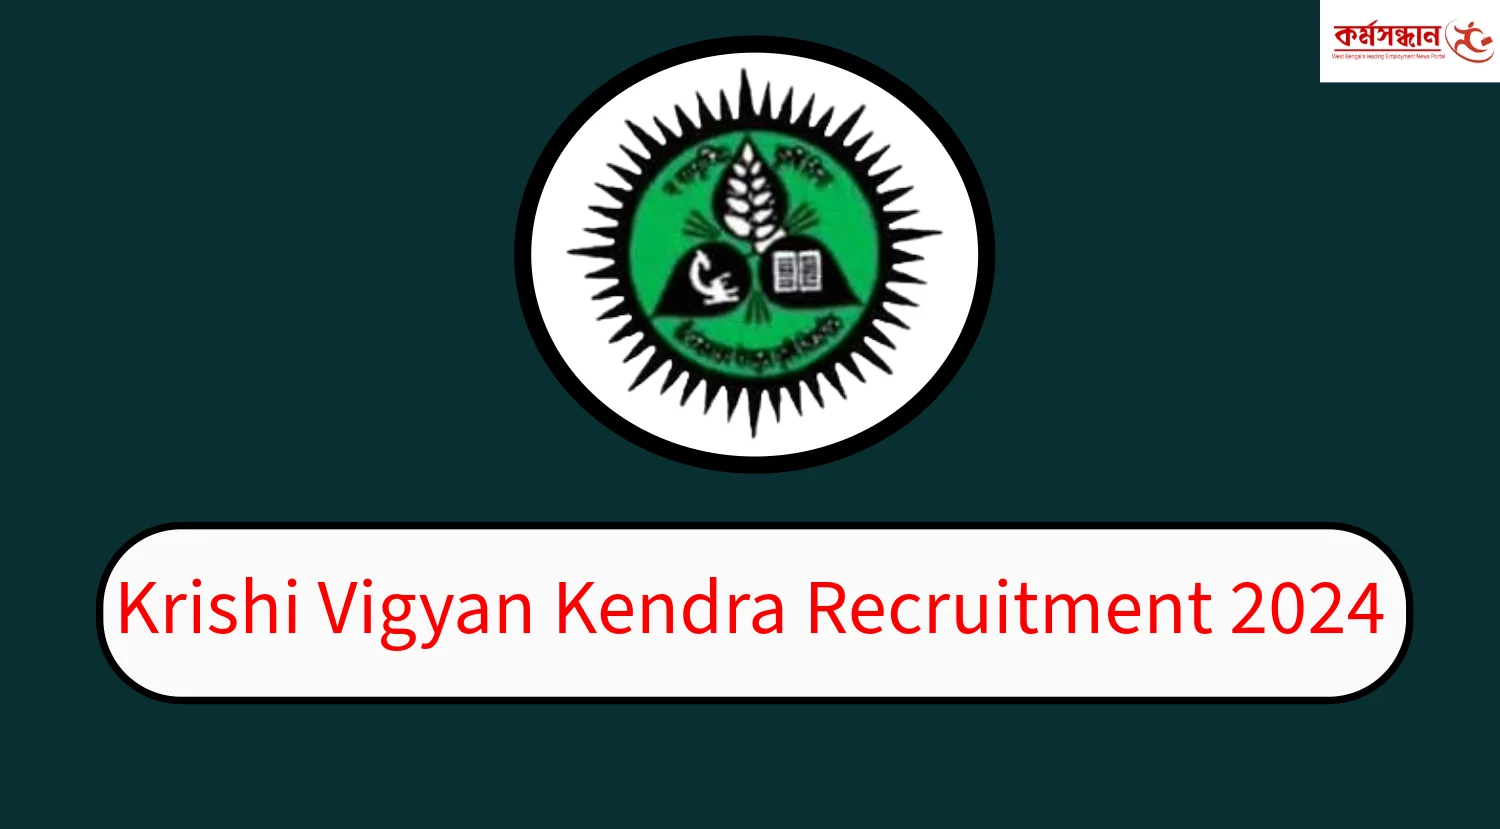 KVK Baramati Recruitment 2021 for various posts | apply online